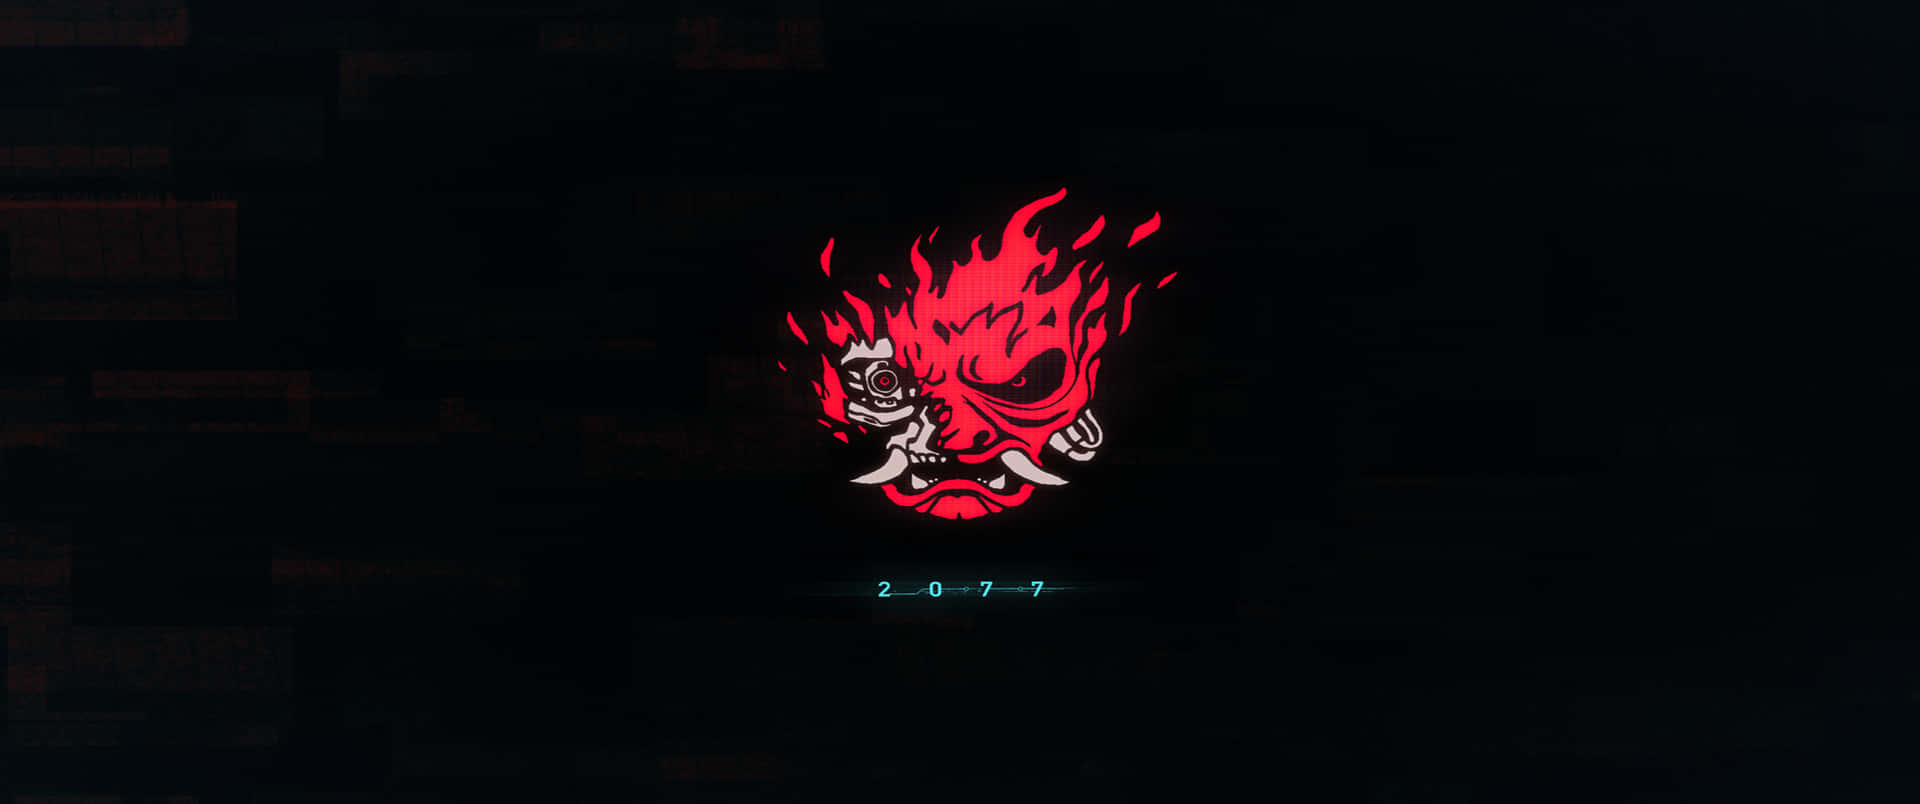 3440x1440p Cyberpunk 2077 baggrund brændende rød kranie